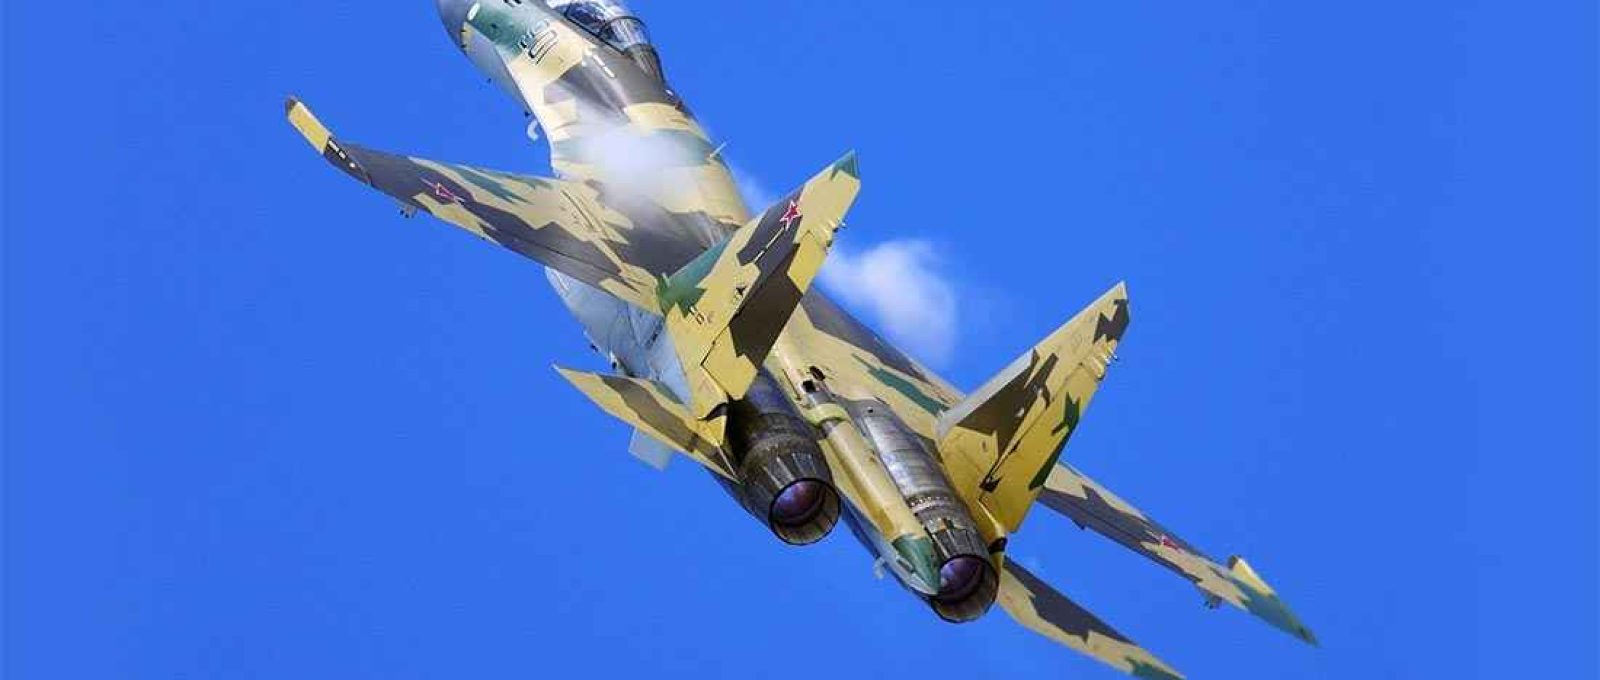 Sukhoi Su-35 da Força Aérea da Rússia (Foto: Toshi Aoki/JP Spotters/CC BY-SA 3.0).